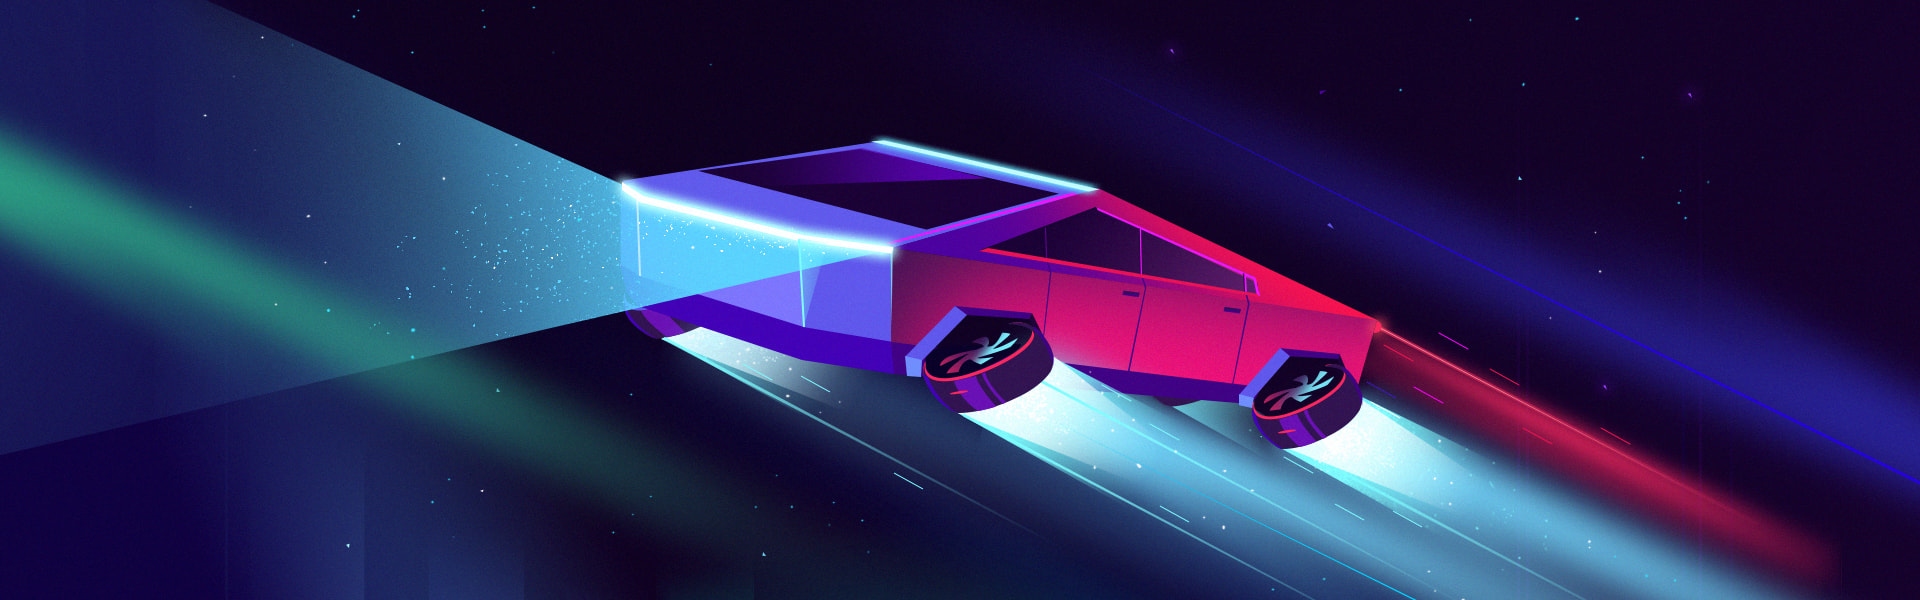 Tesla Cybertruck illustration by Shakuro